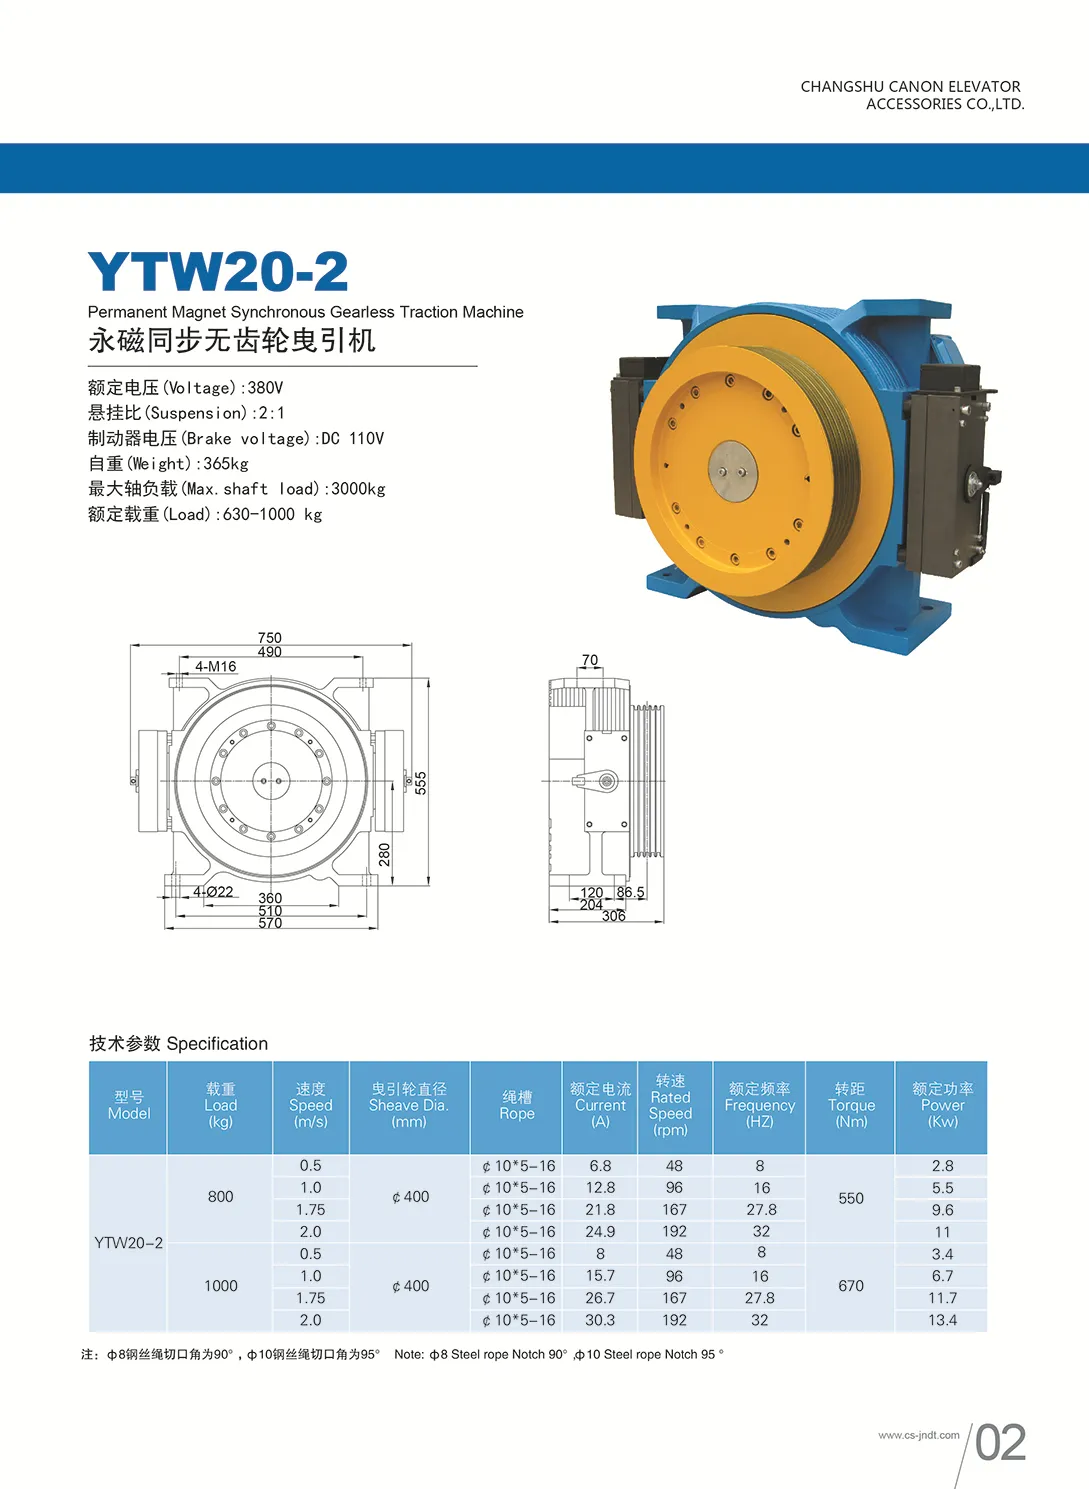 Hauptteil des Aufzugs: Permanentmagnet-Synchron-Getriebemotor, Traktionsmaschine, Modell YTW20-2